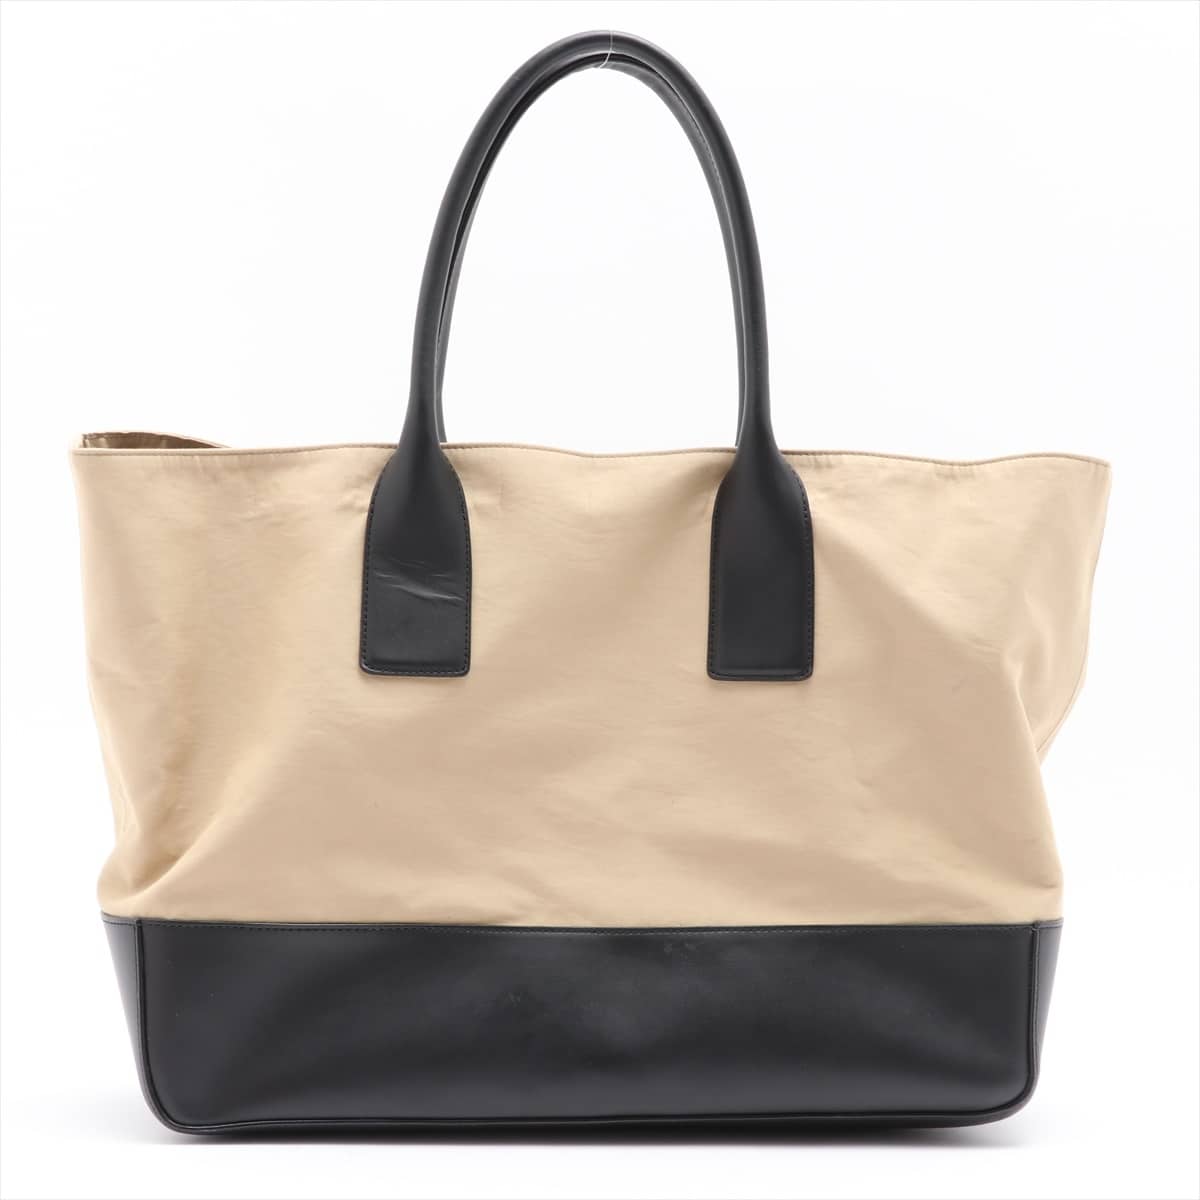 Bottega Veneta Canvas & leather Tote bag black x beige